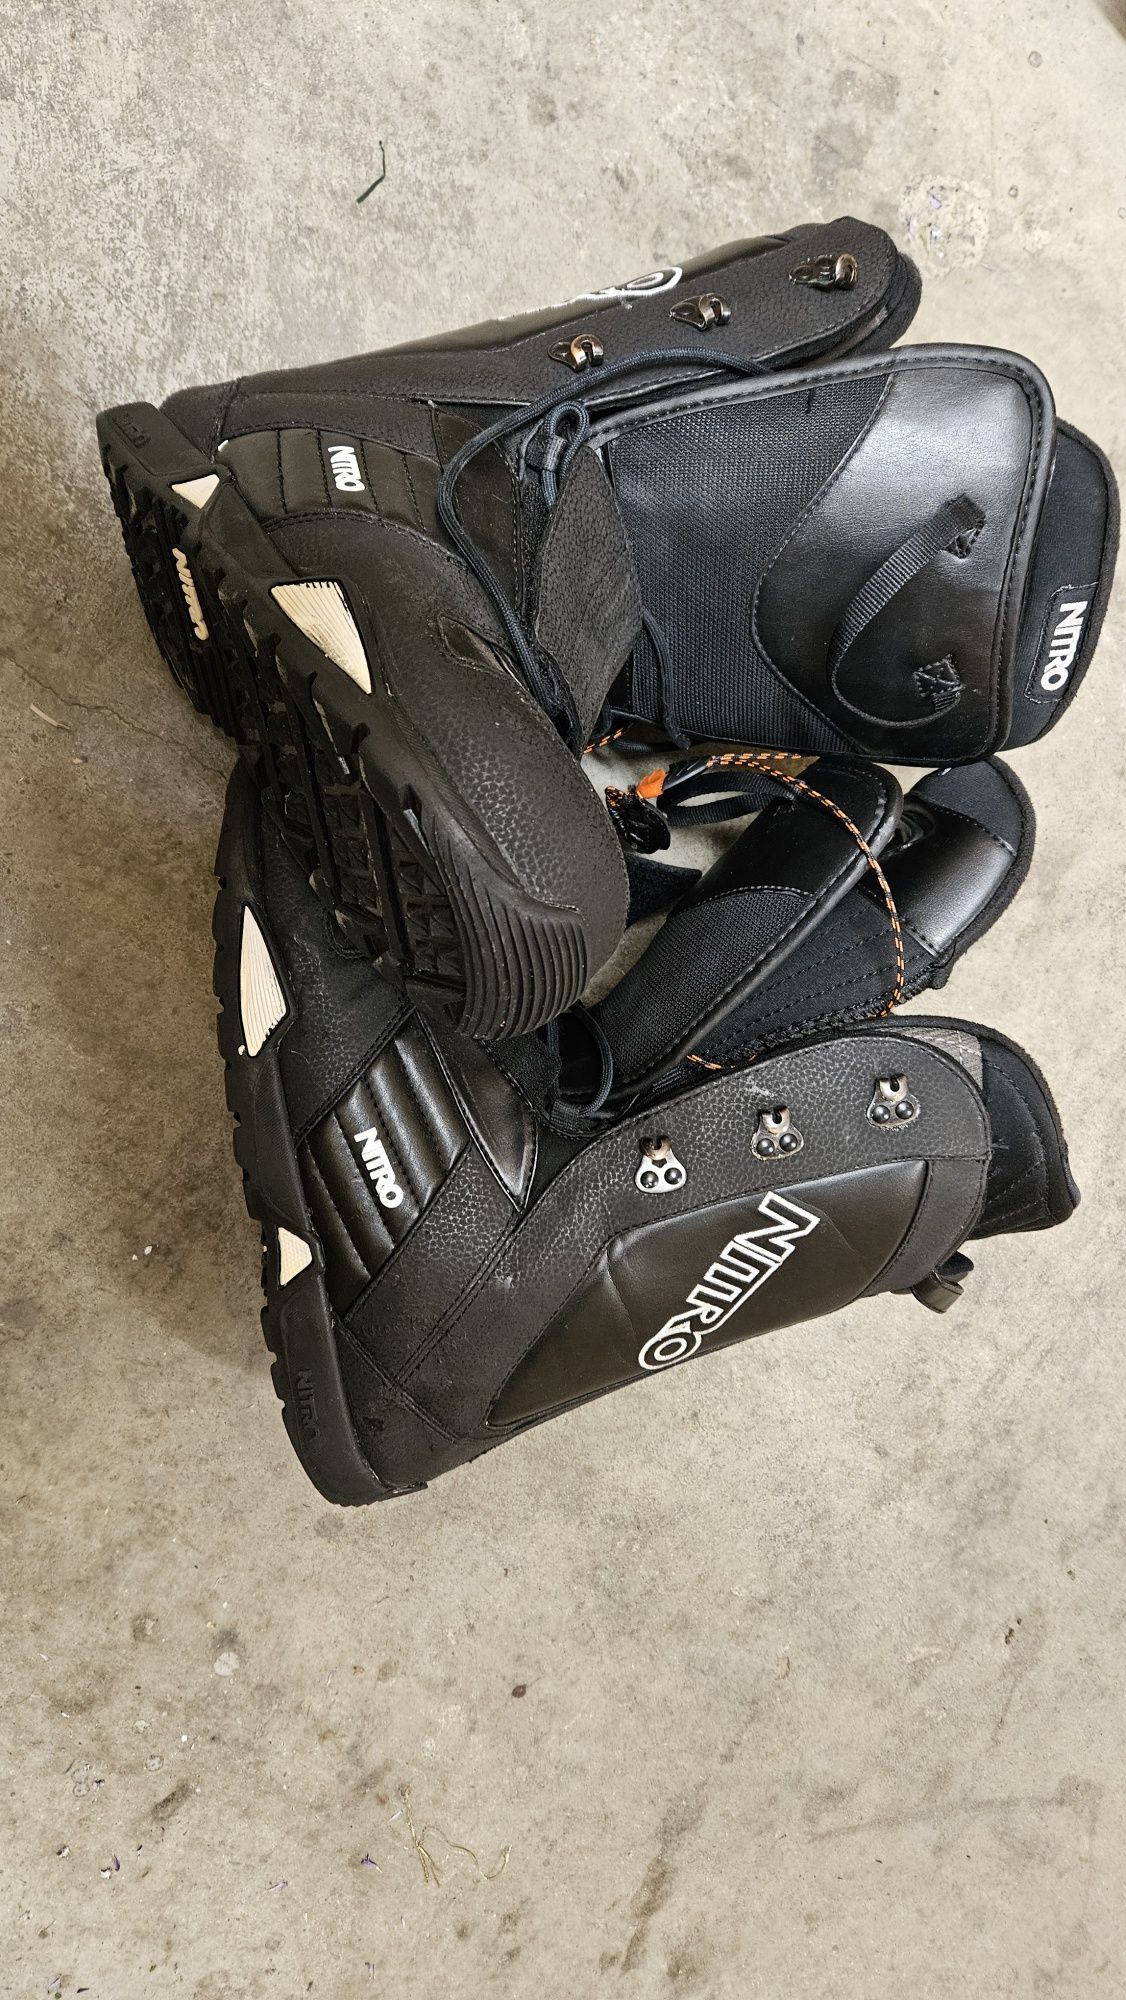 Placa Snowboard Nitro 157cm și boots Nitro marime 42-43 (29cm)